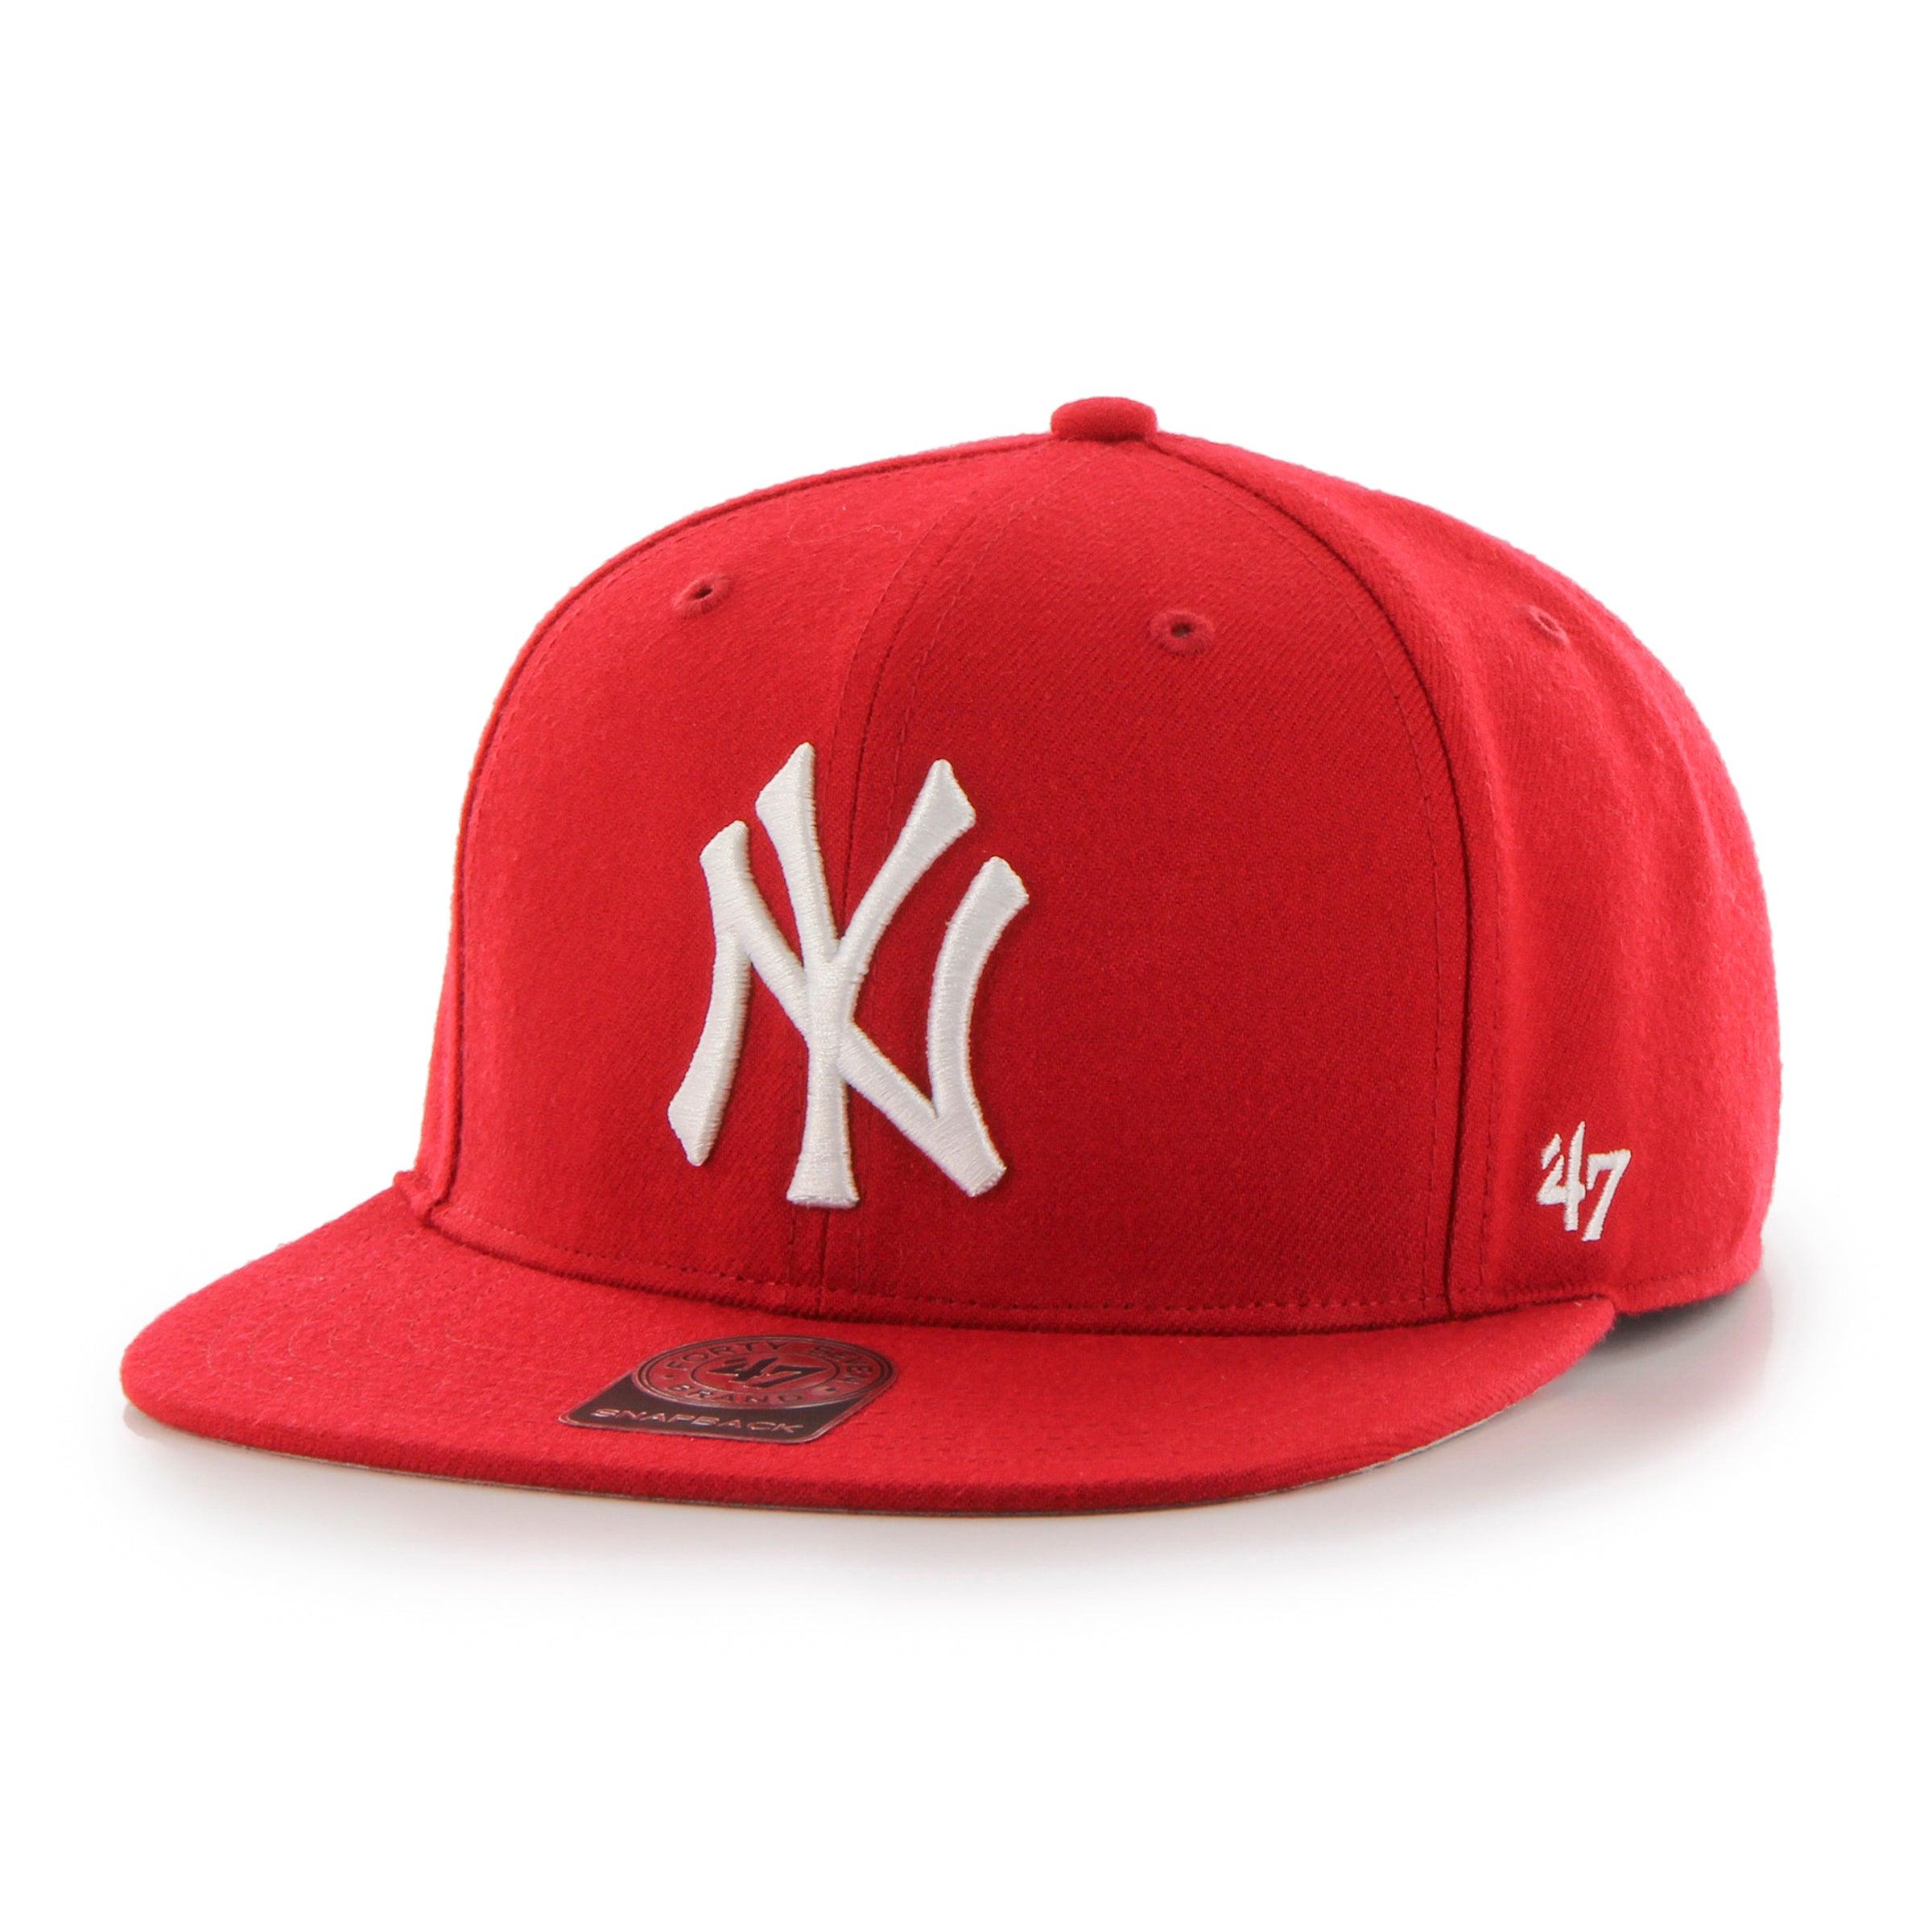 MLB NEW YORK YANKEES NO SHOT ’47 CAPTAIN RED - FAM